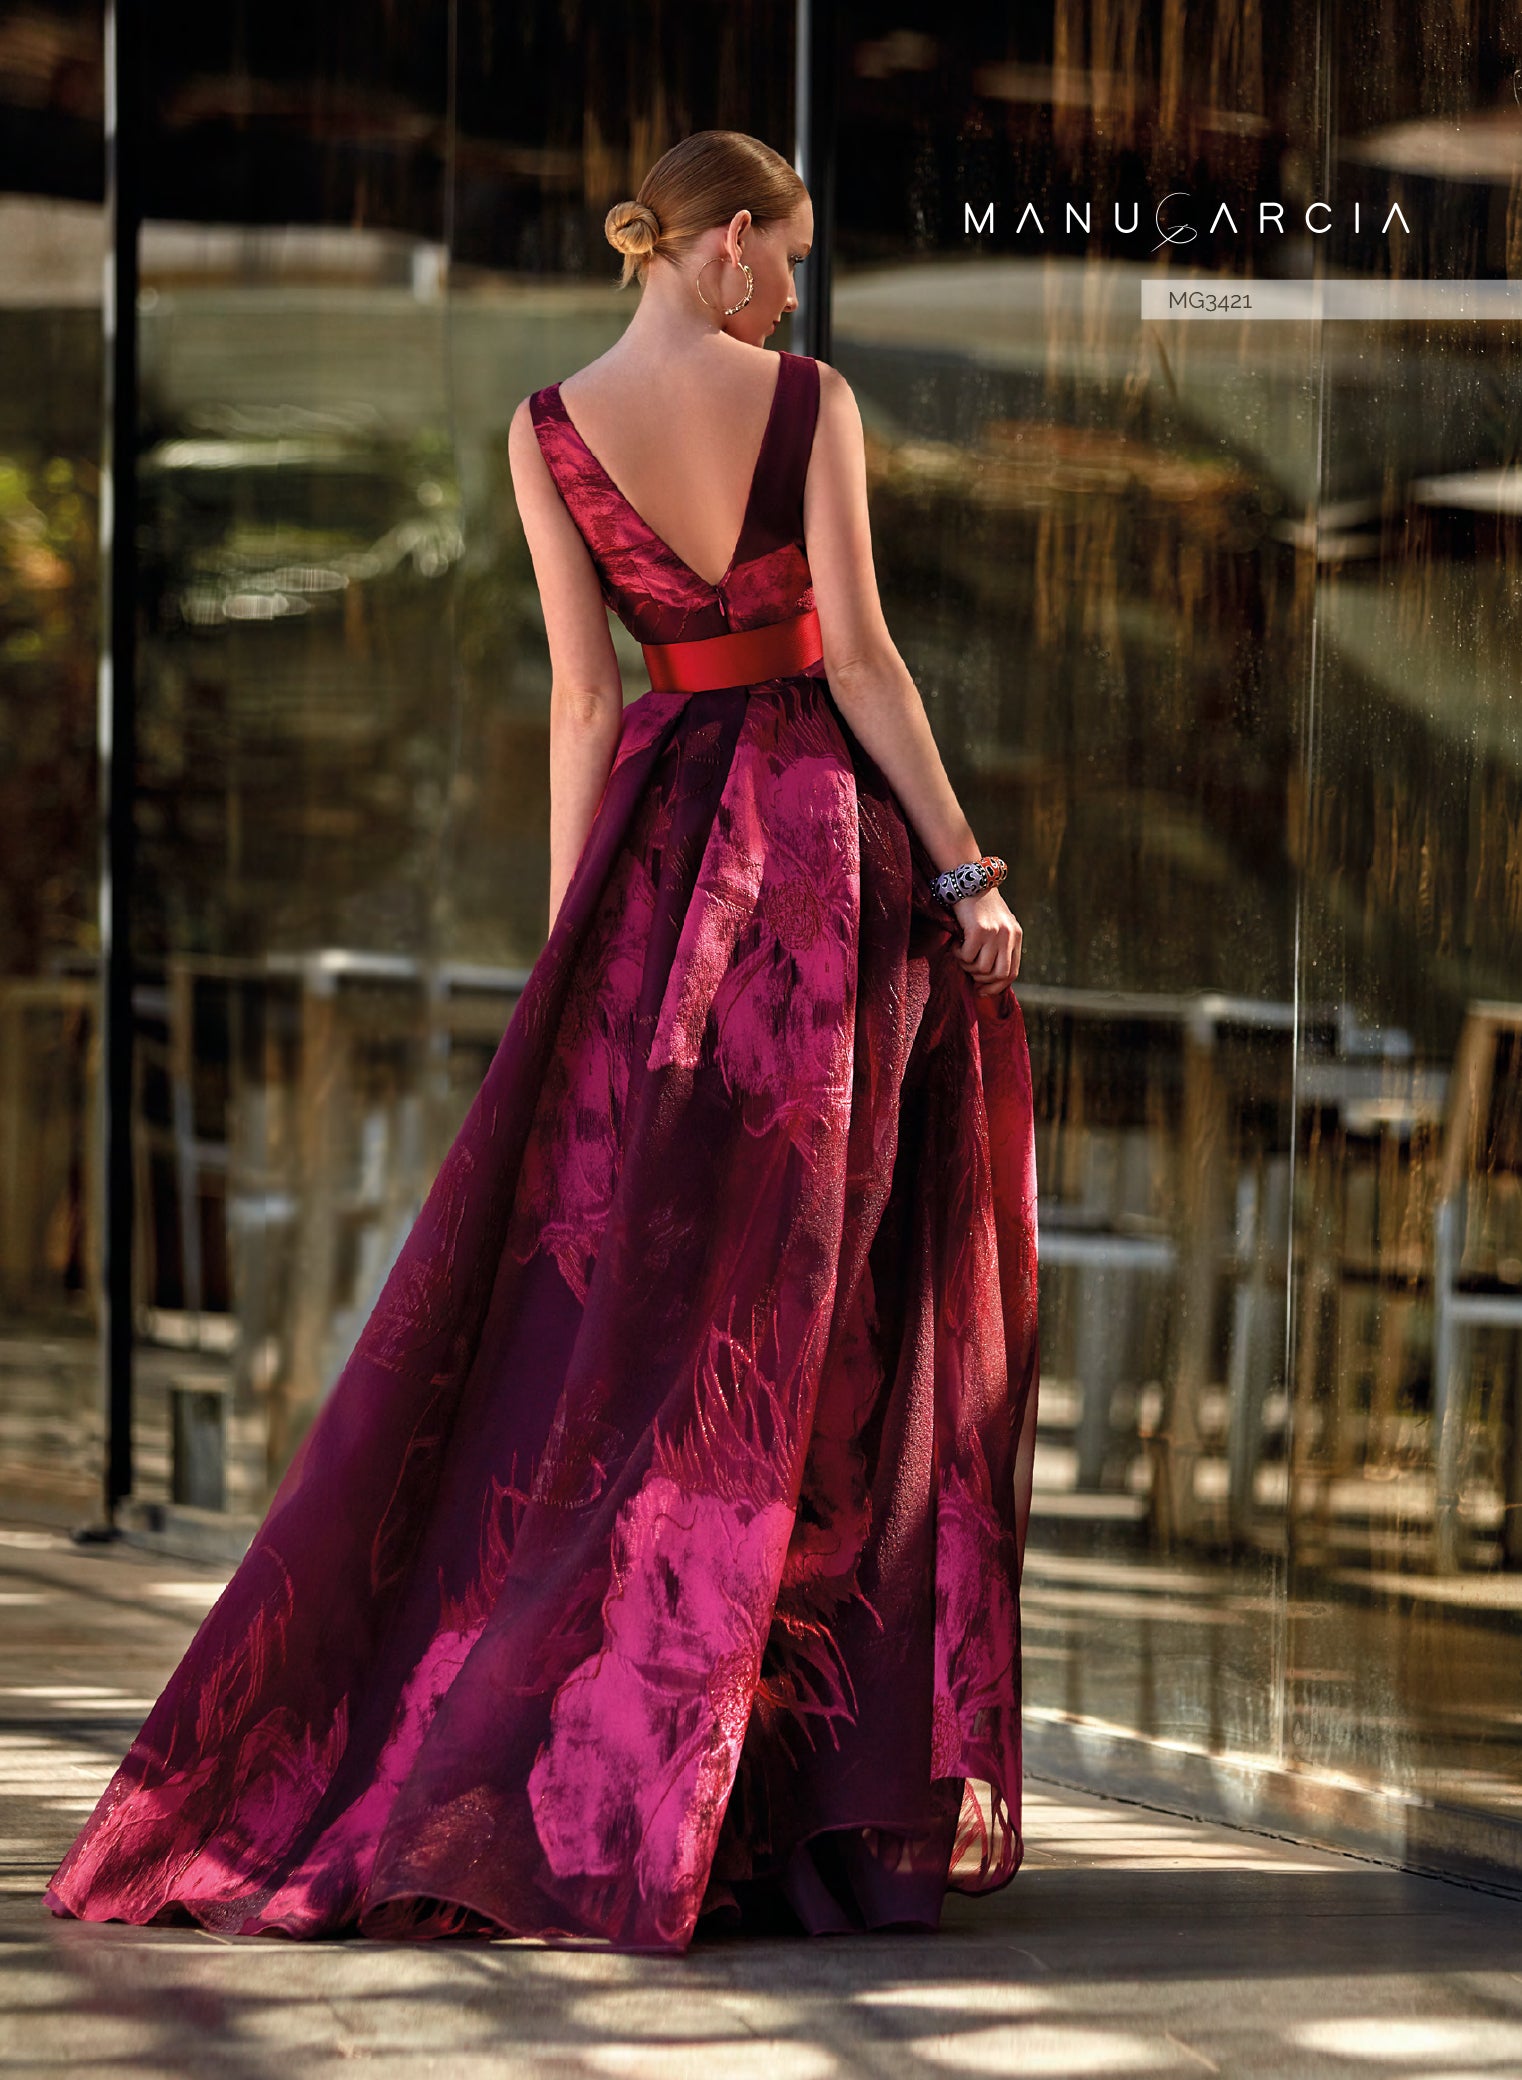 Hot Princess Pink dress with cut work dupatta – Indianvirasat